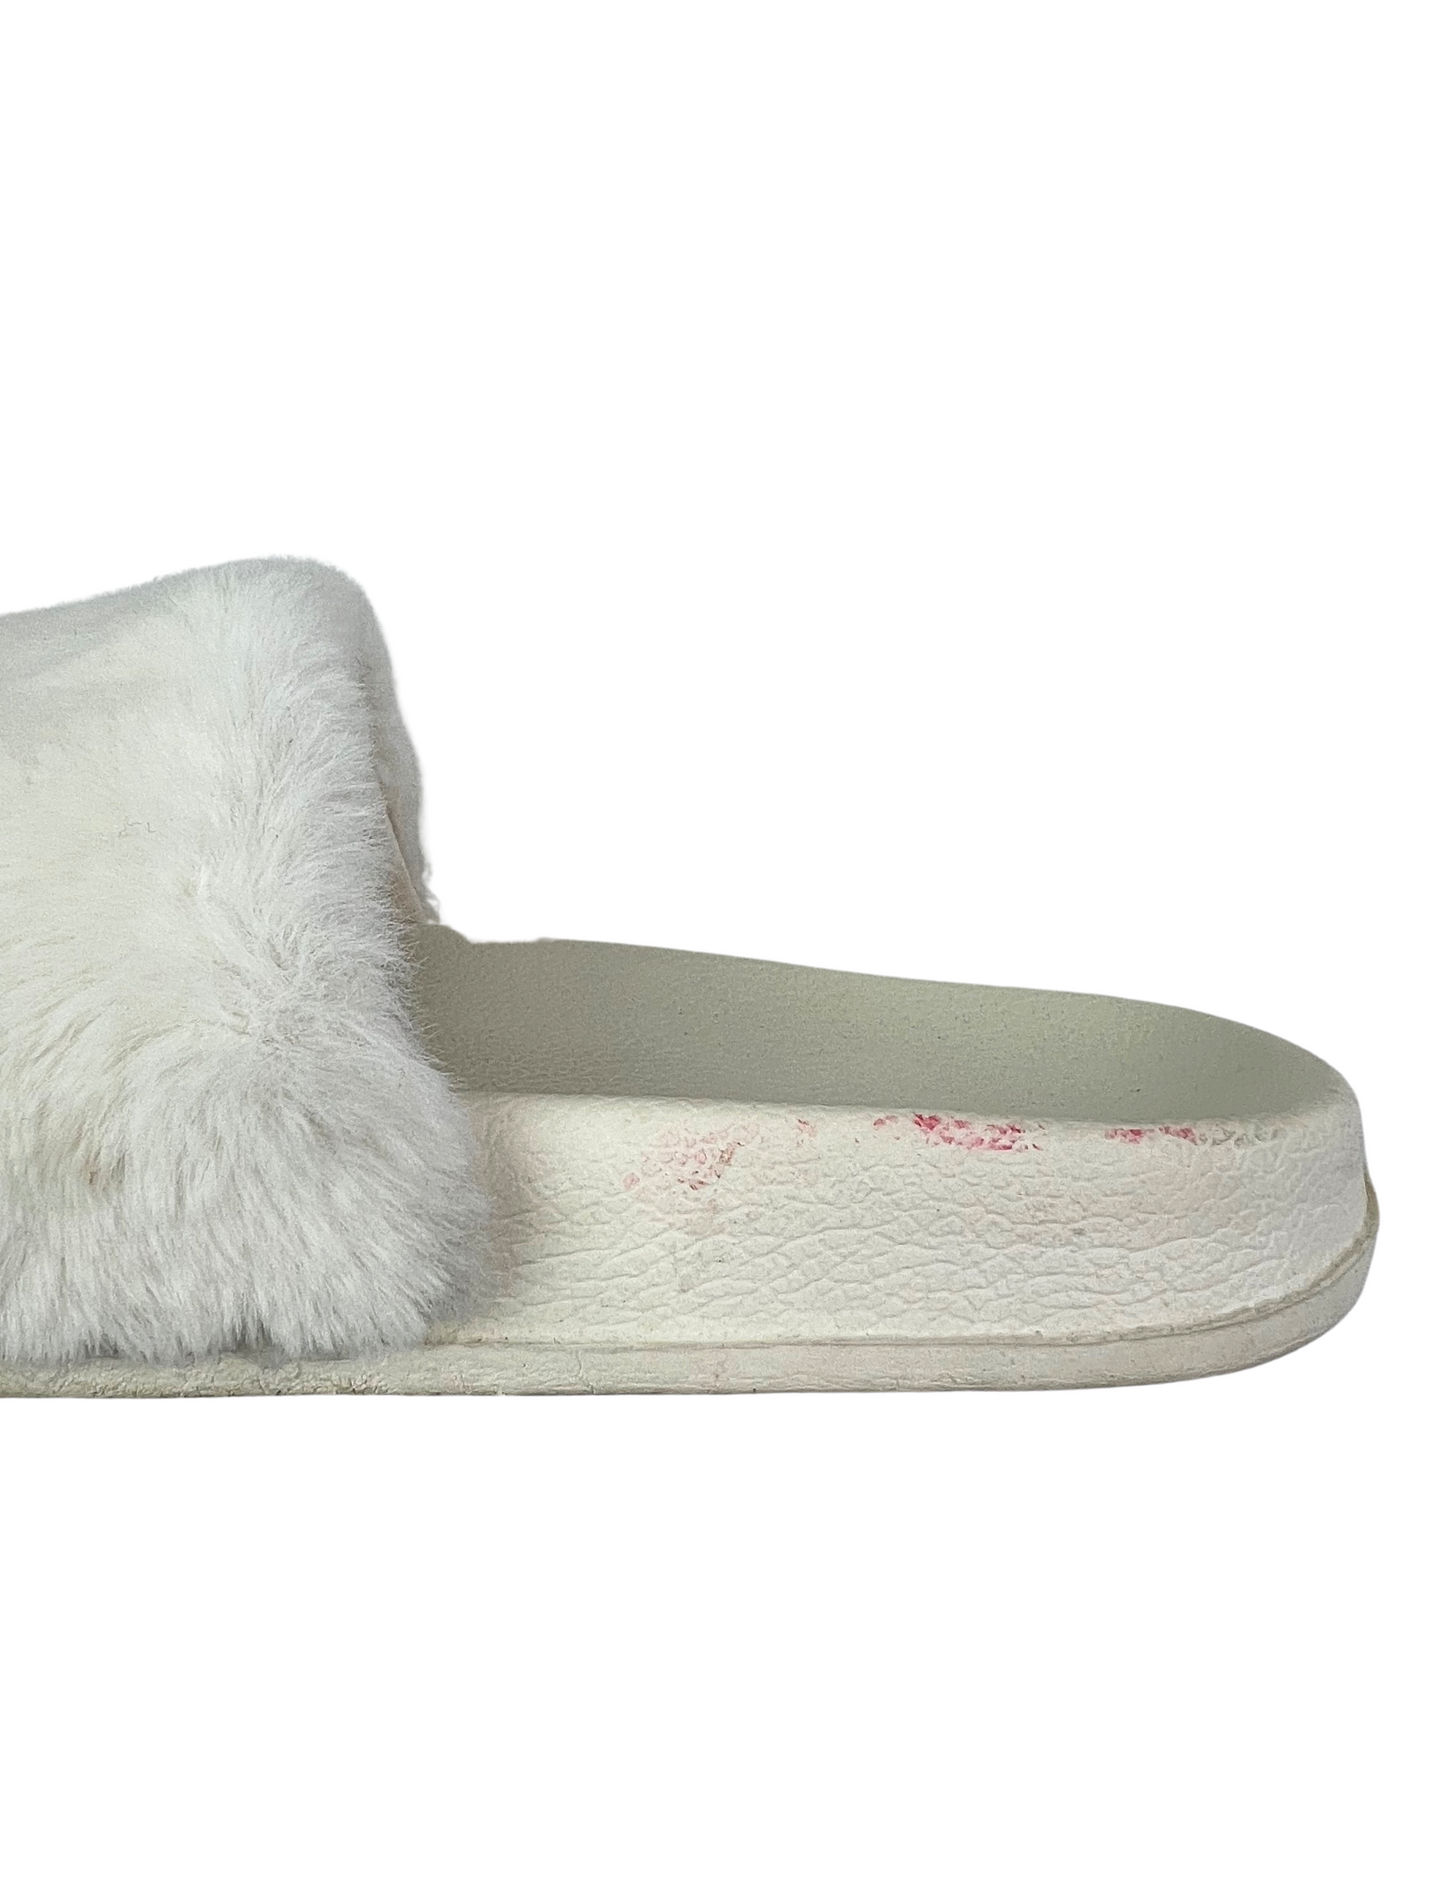 80’s White Faux Fur Fuzzy Slide Slippers Size 7